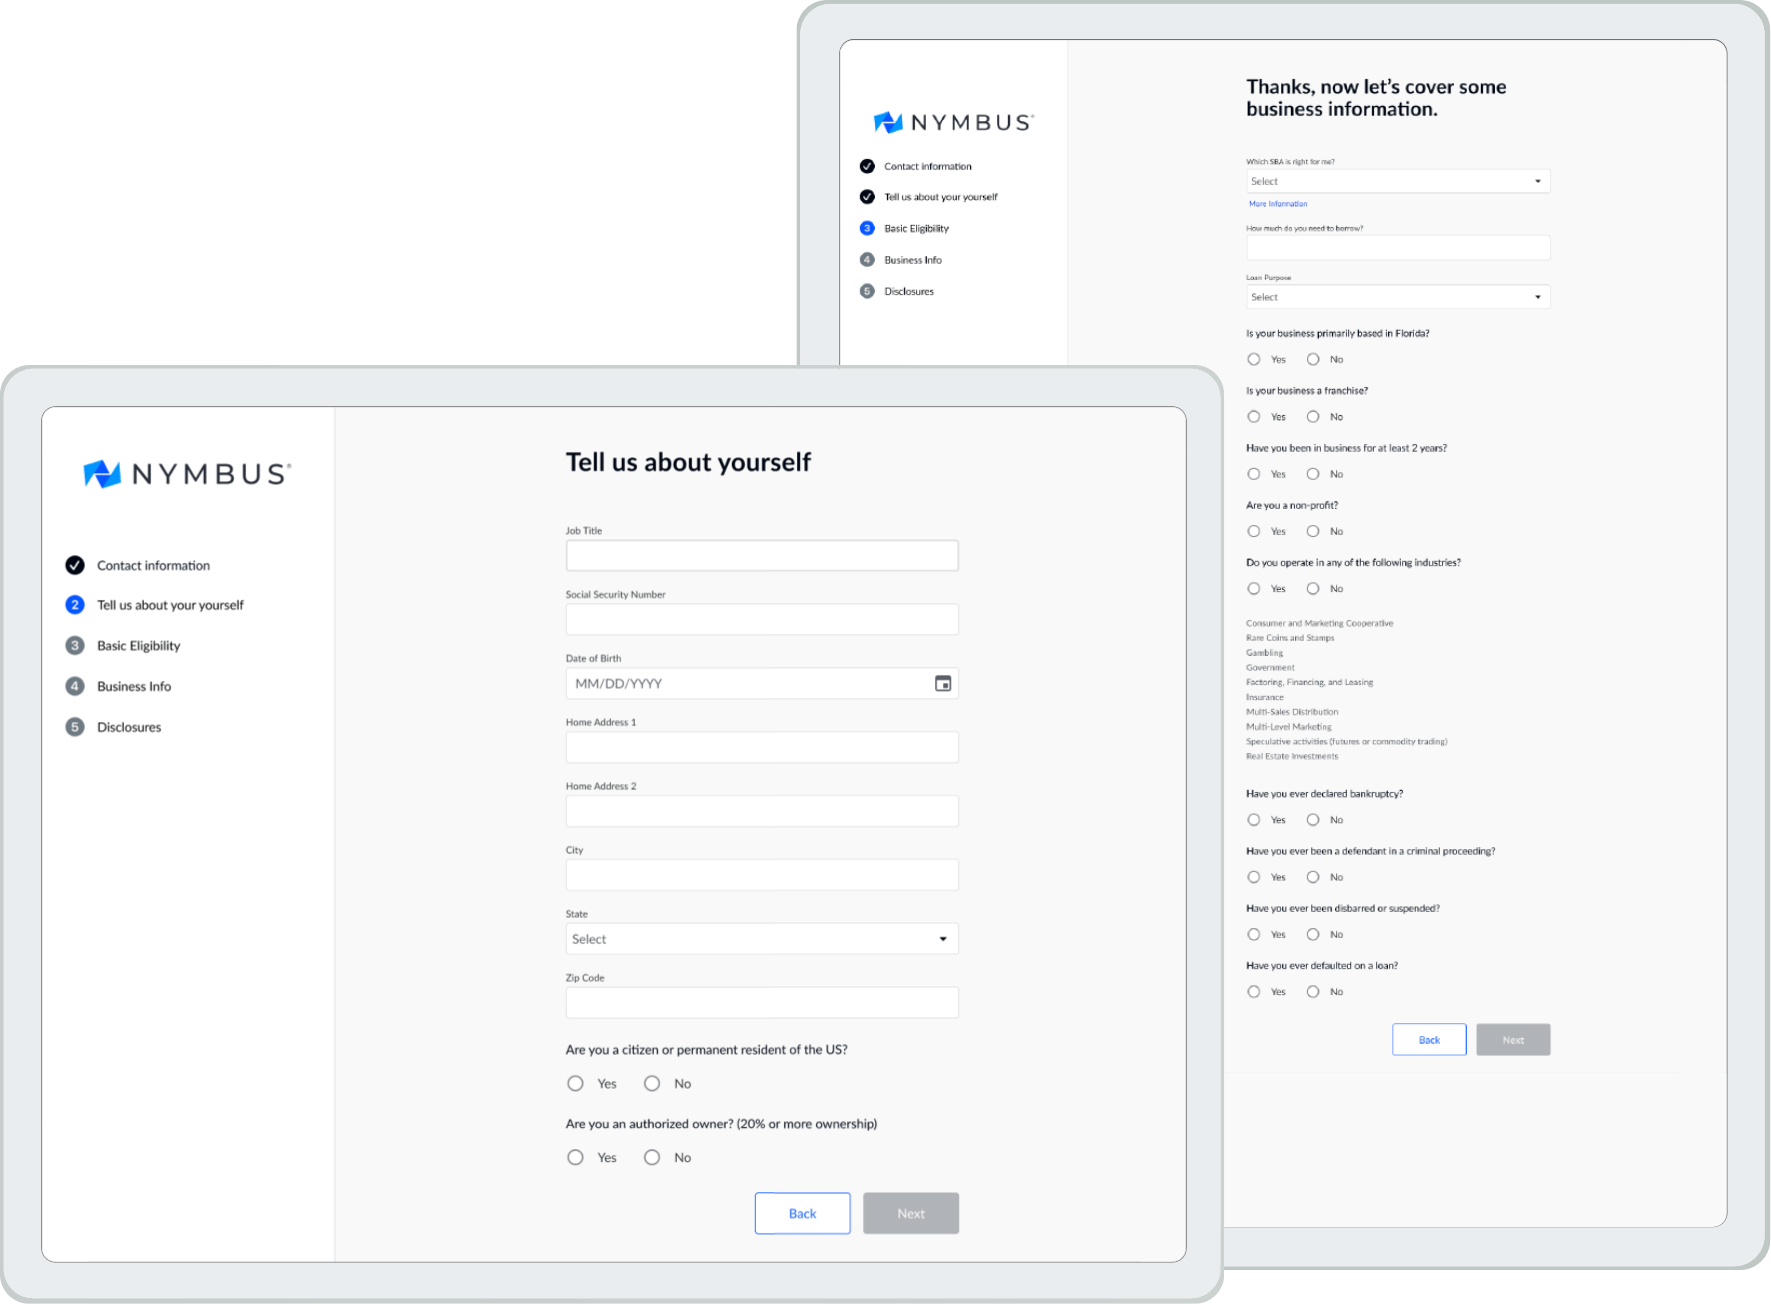 Screenshots of Nymbus lending applications